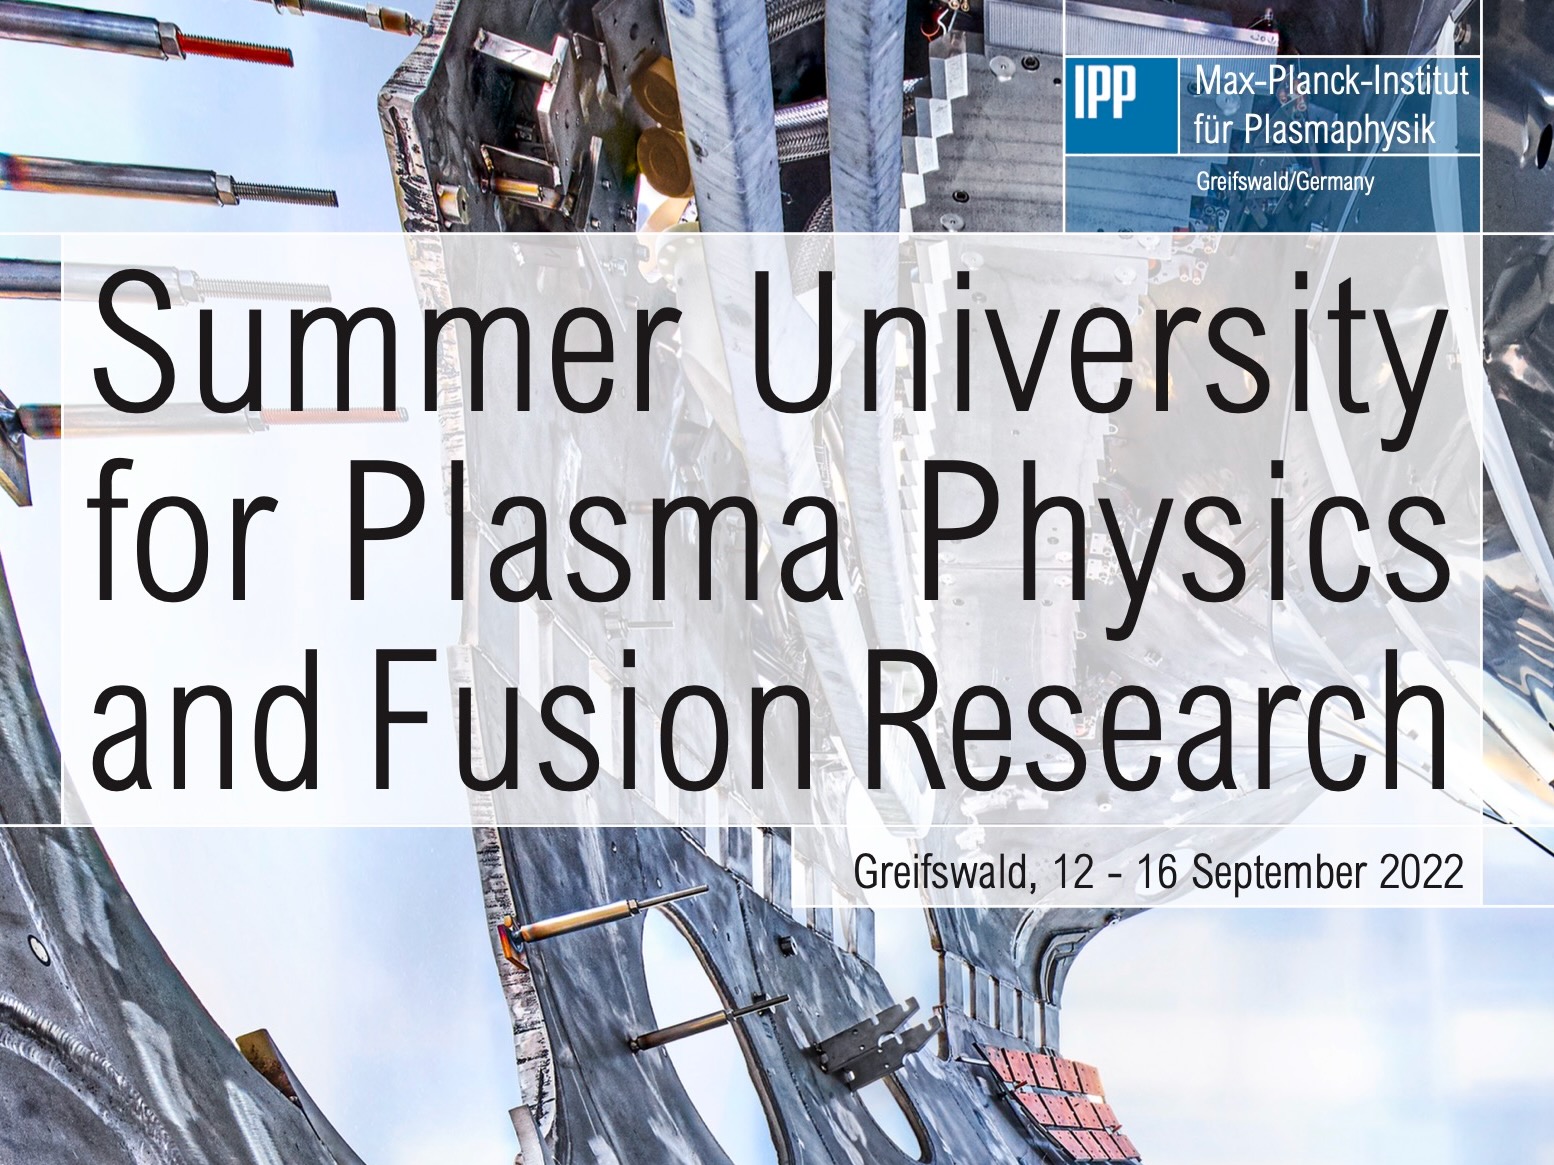 plasma physics phd programs in germany